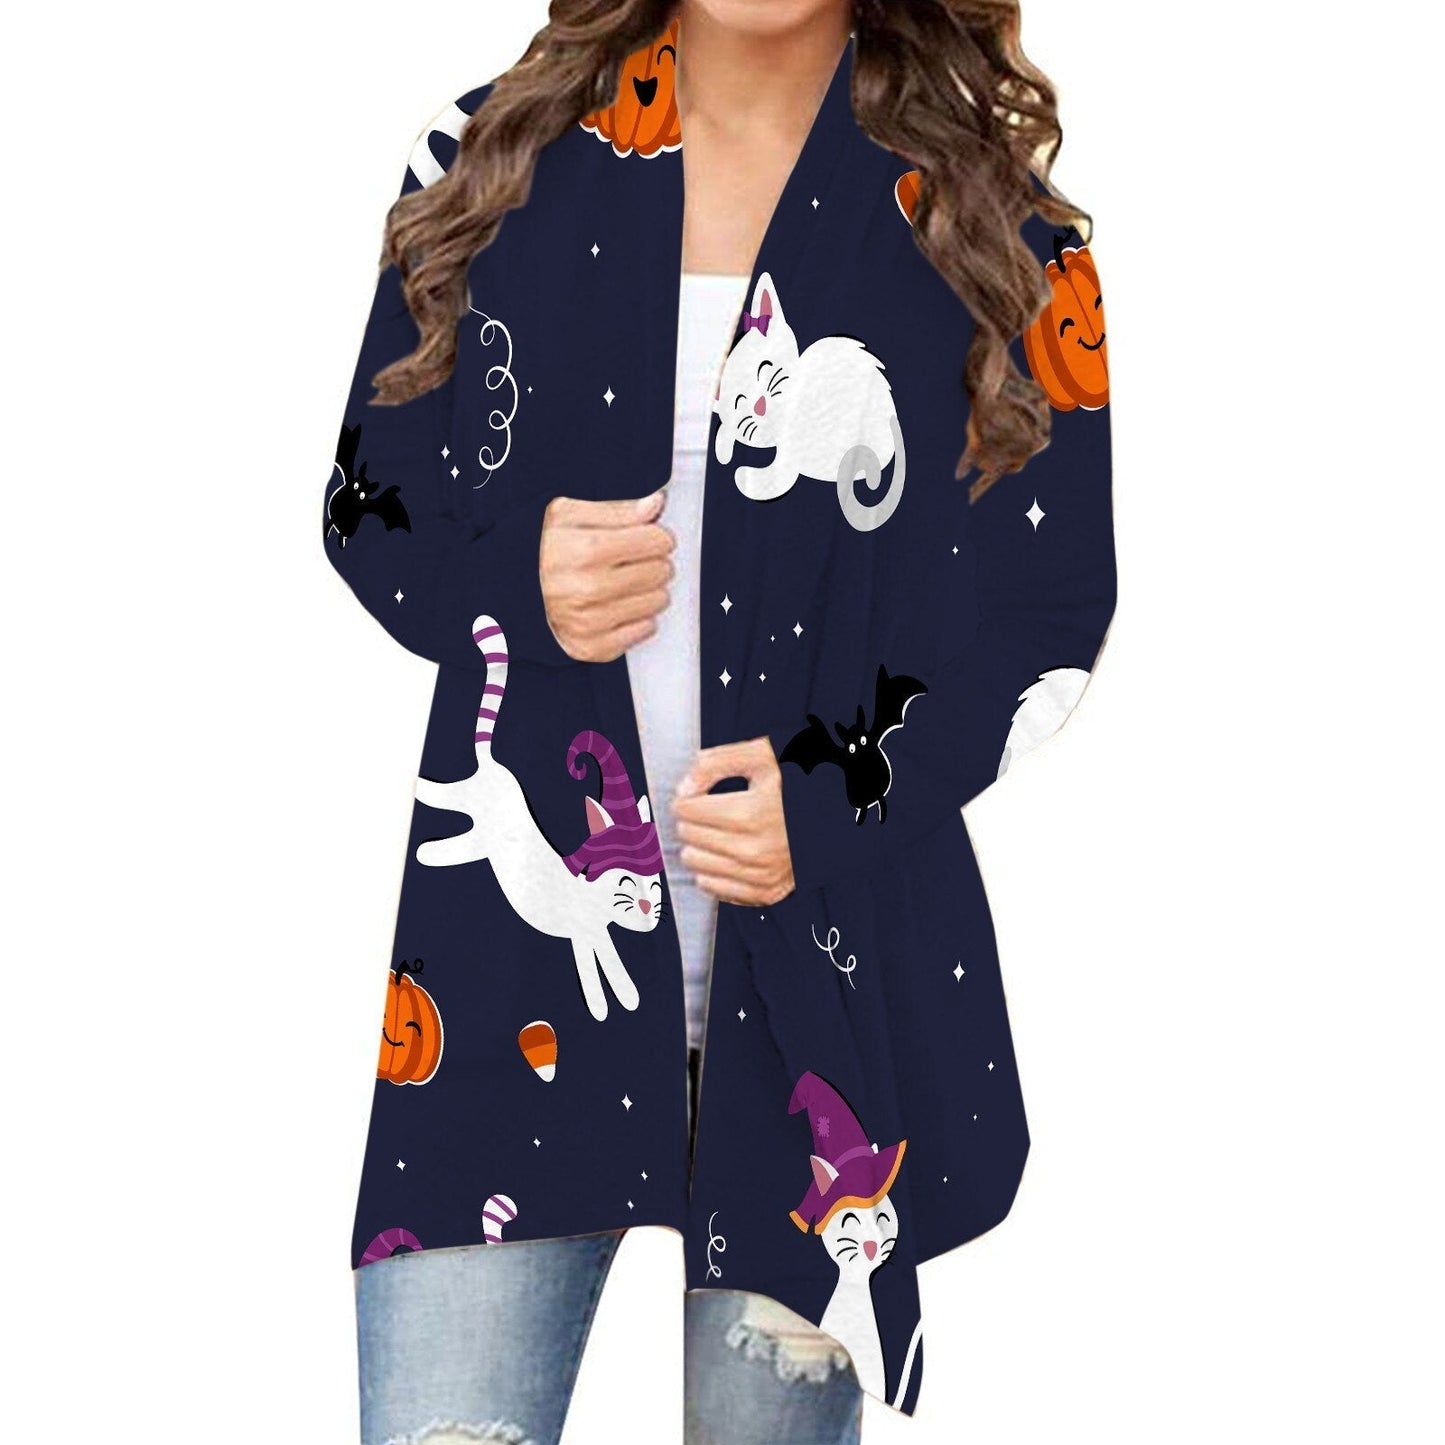 Halloween Printed Cardigan Women Casual Ghost Cat Cartoon Festival Fashion Long Sleeve Casual Cardigan Jacket Coat Top Jersey